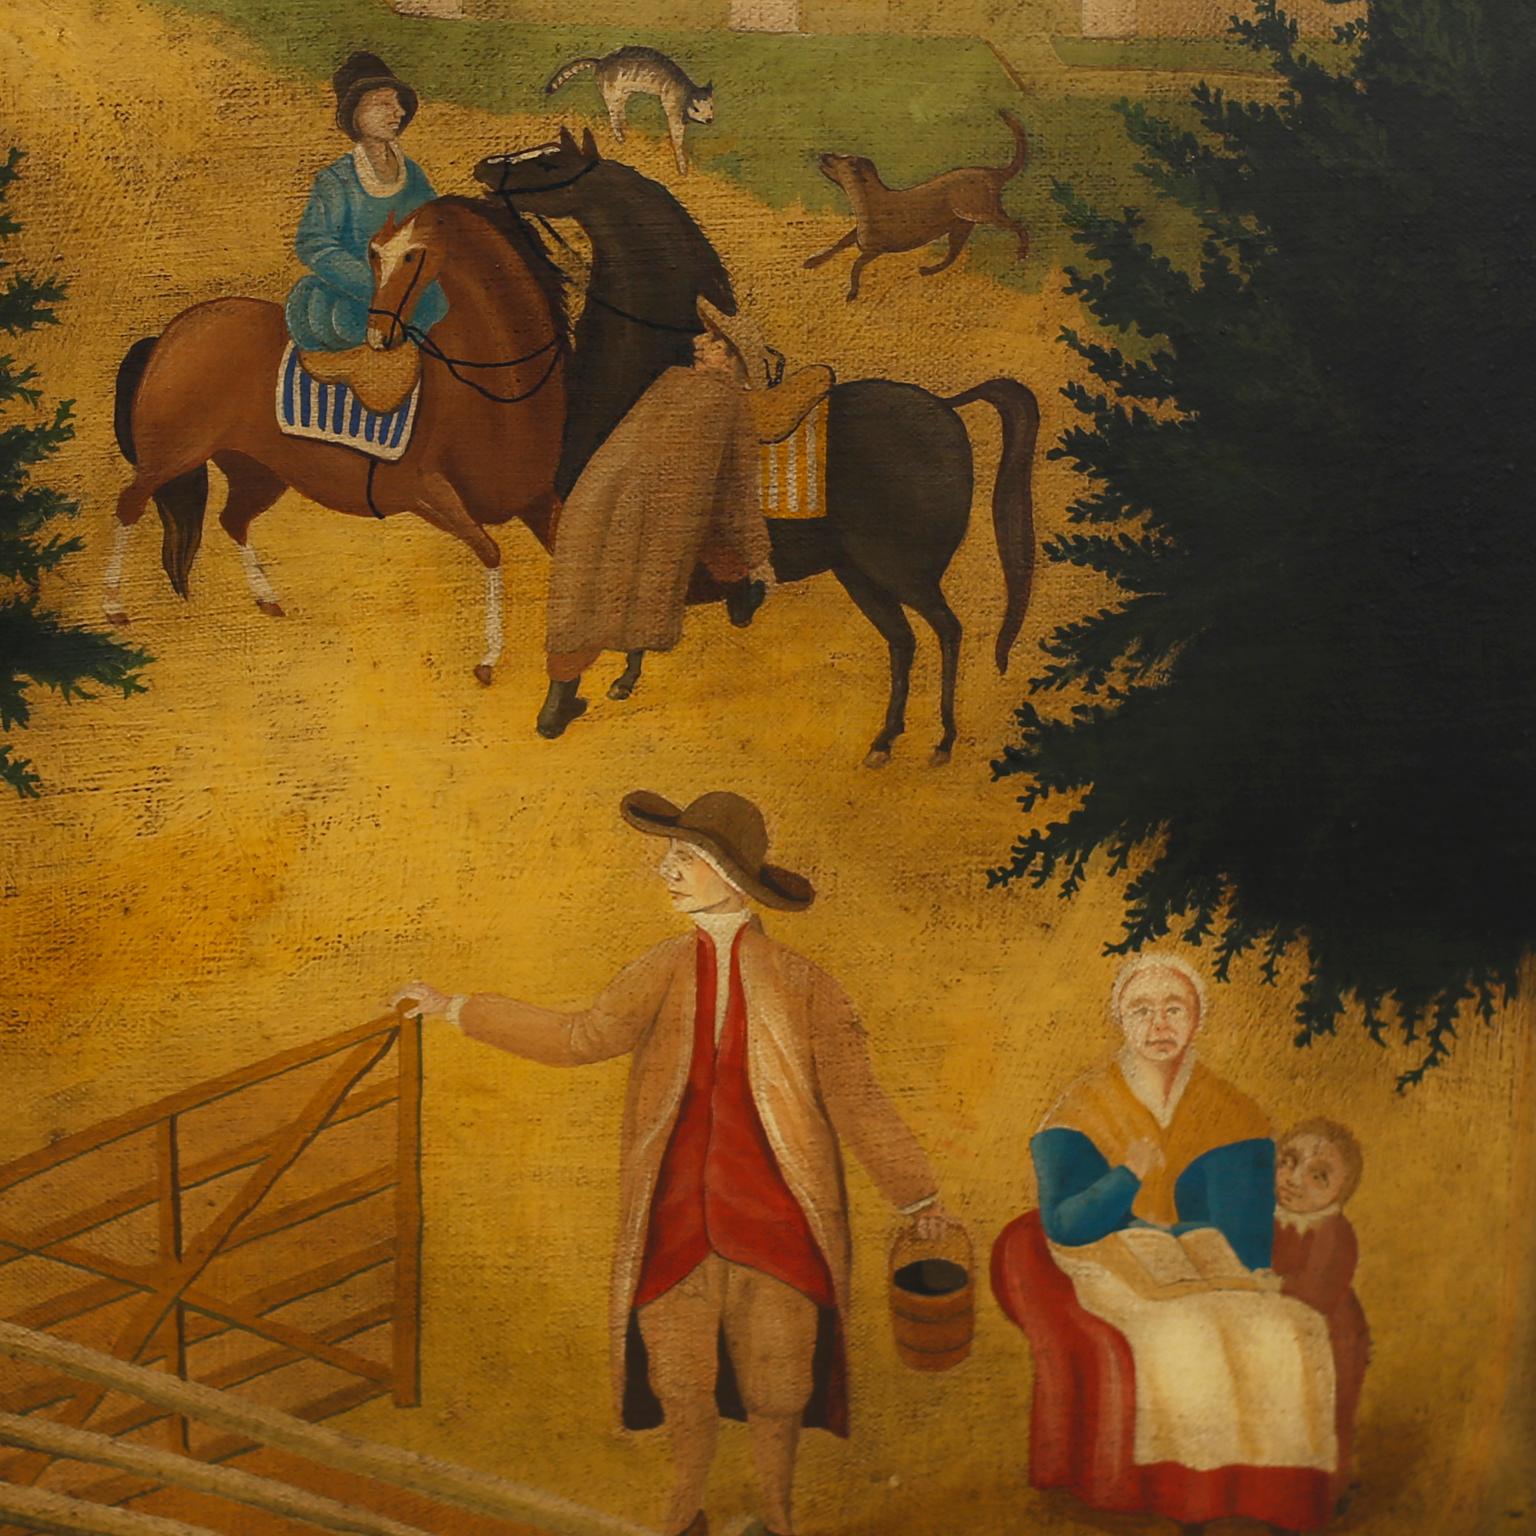 Oiled Oil Painting on Canvas of a Farm Scene